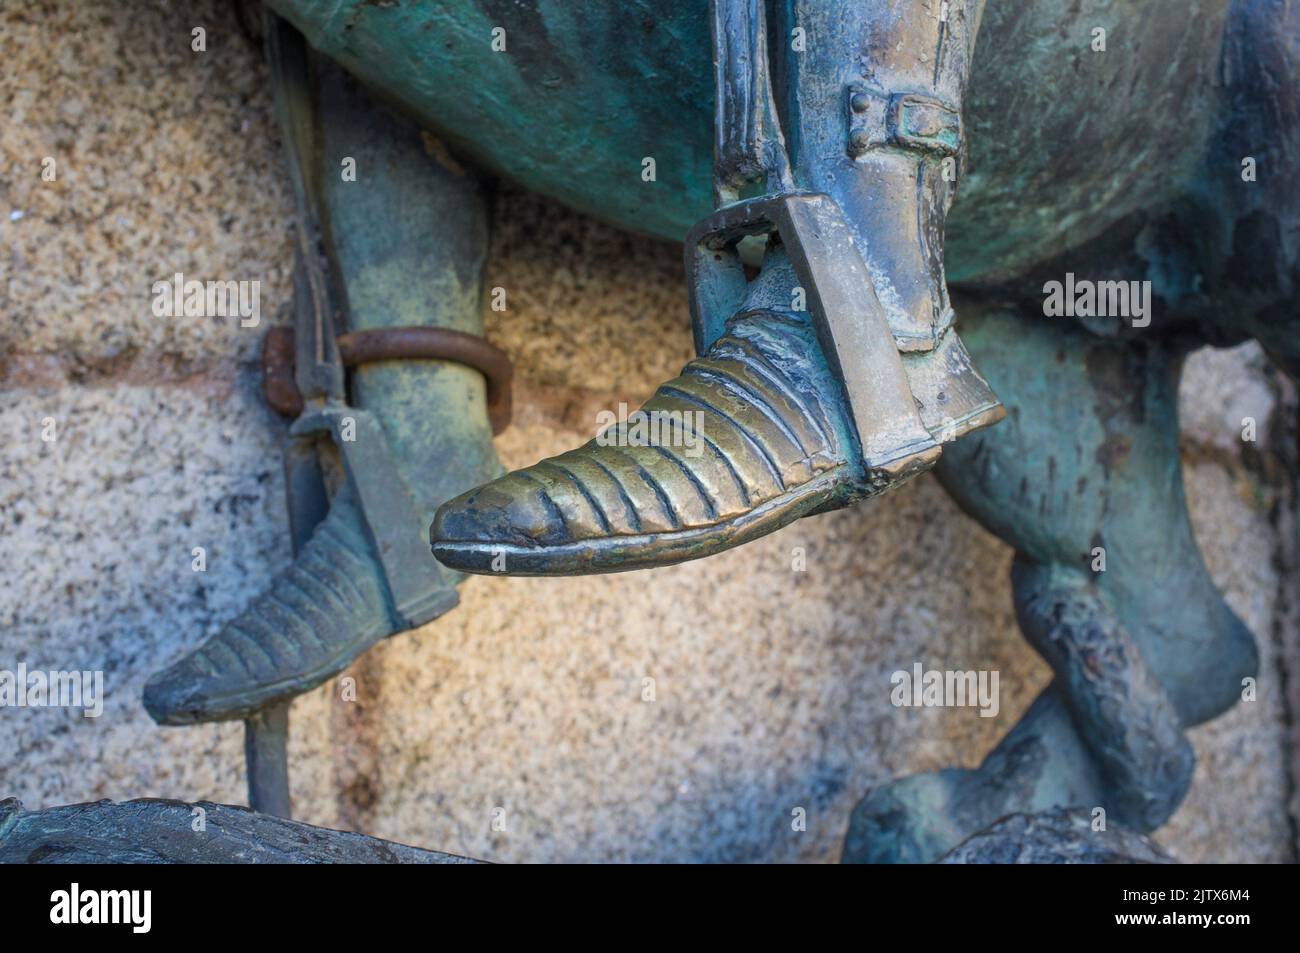 Pies en estribo de San Jorge. Escultura en bronce en Cáceres, España. Foto de stock